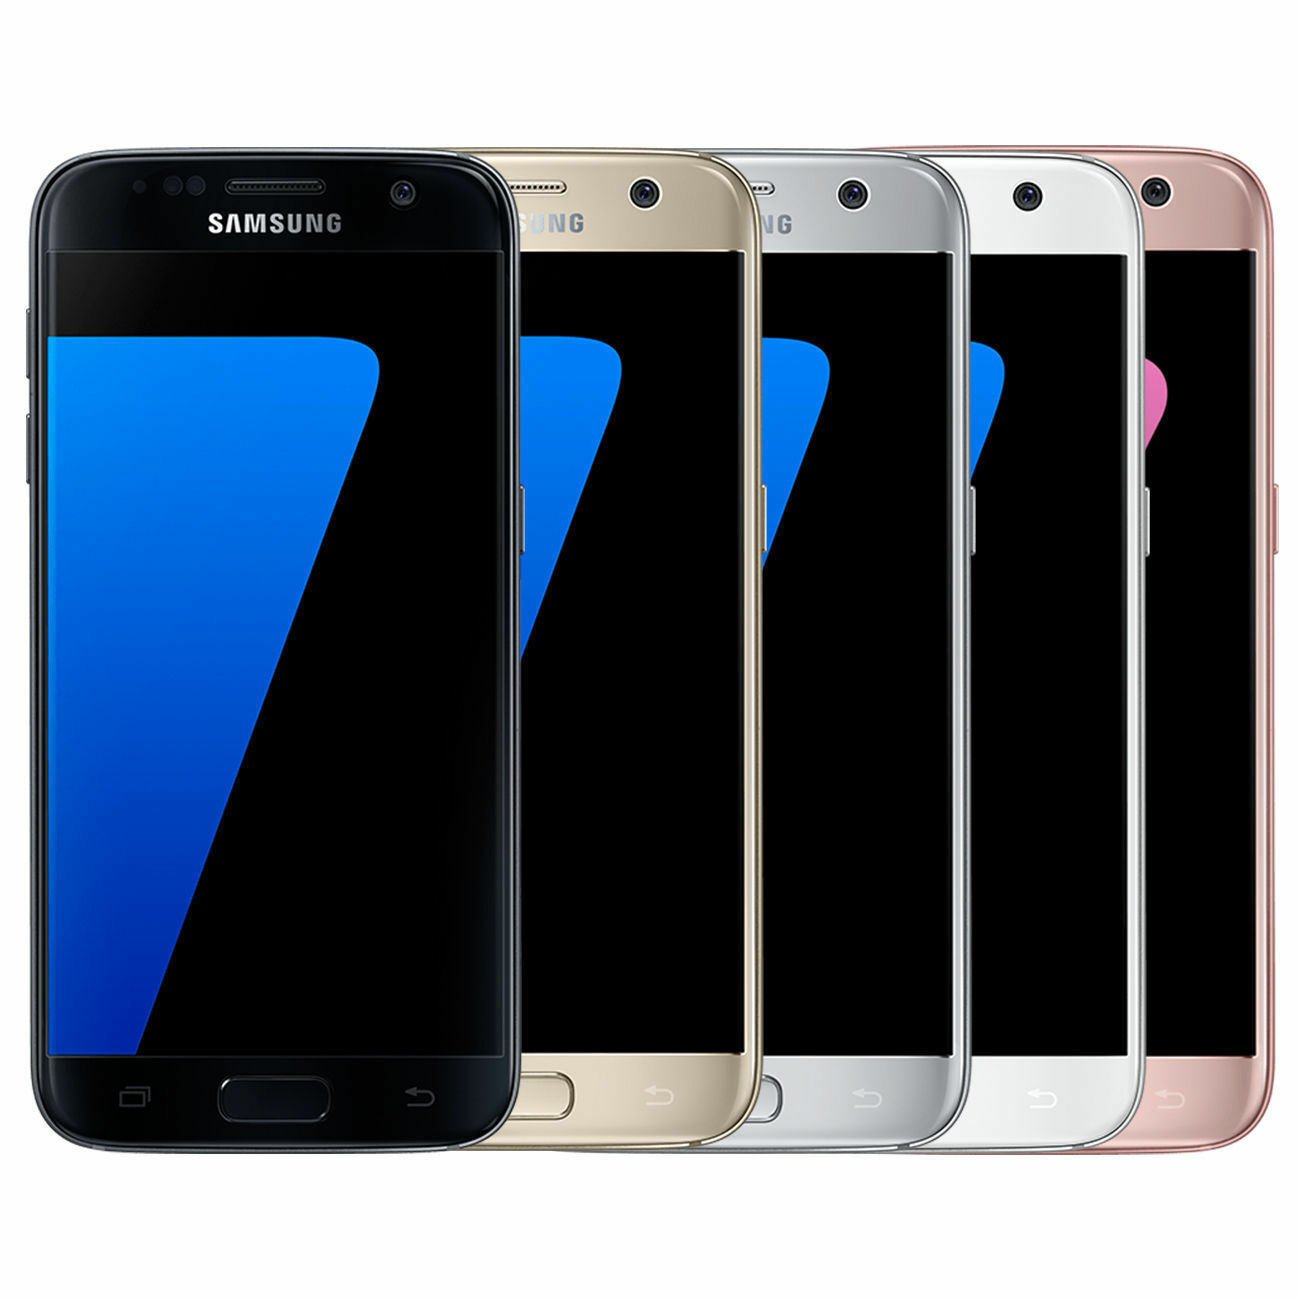 Refurbished Samsung Galaxy S7 32GB SMG930 Unlocked Smartphone 2